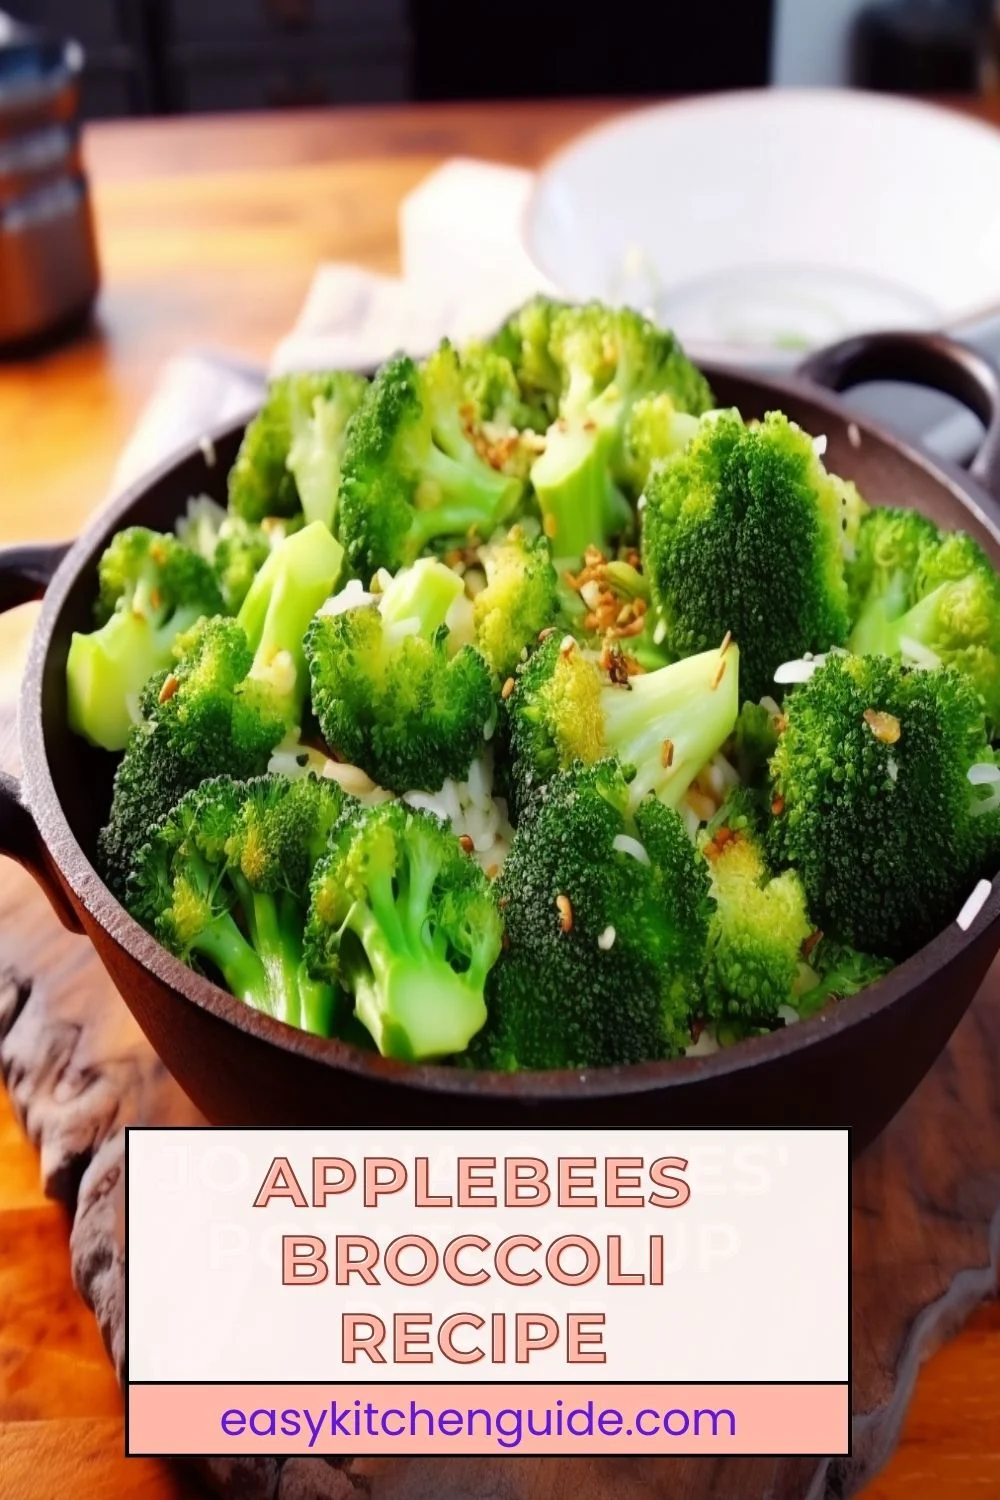 Applebees Broccoli Recipe